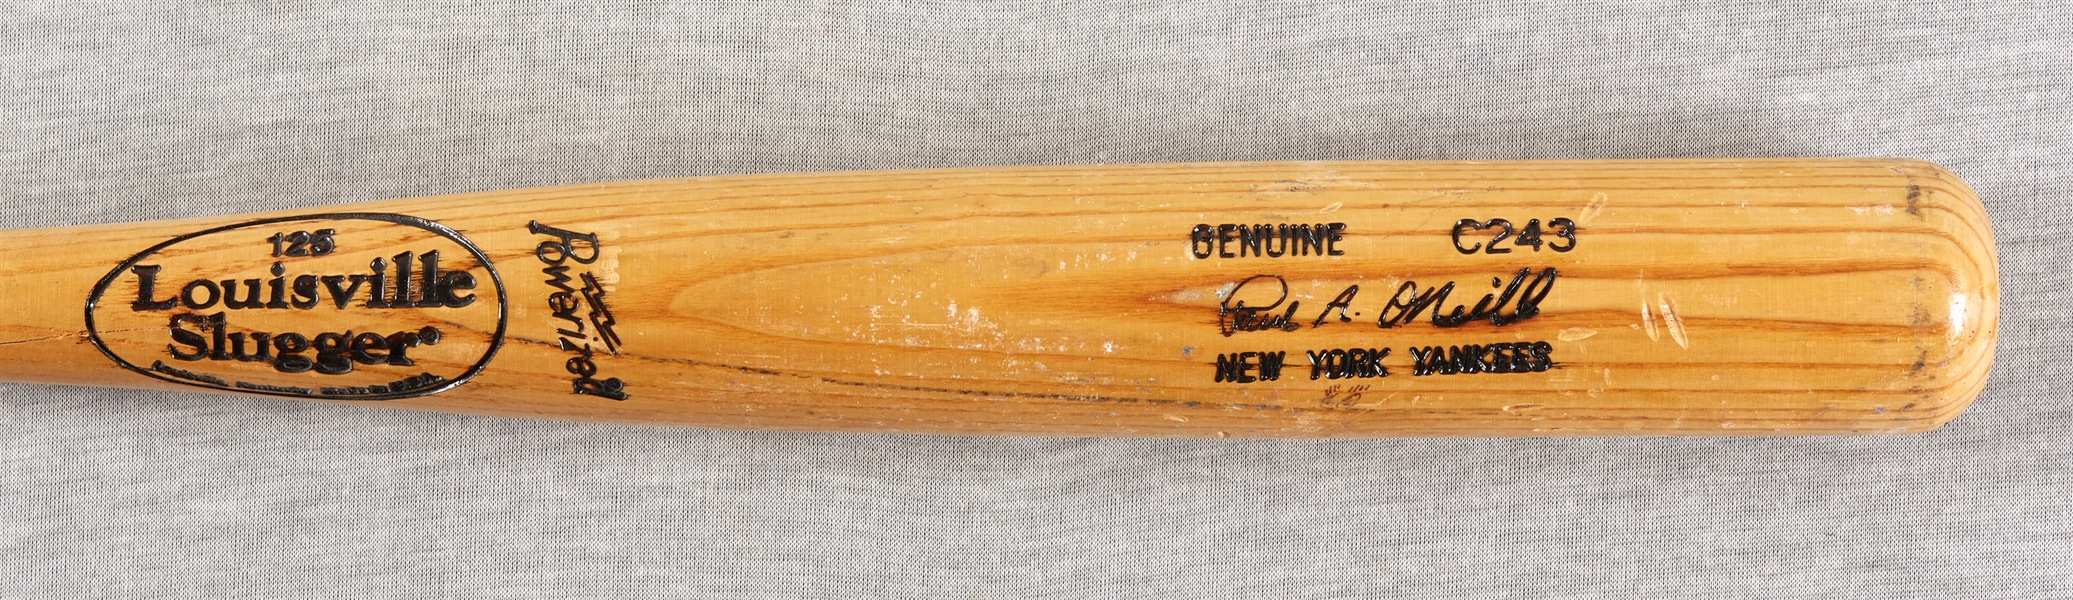 Paul O'Neill Signed 1998 Game-Used Louisville Slugger Bat